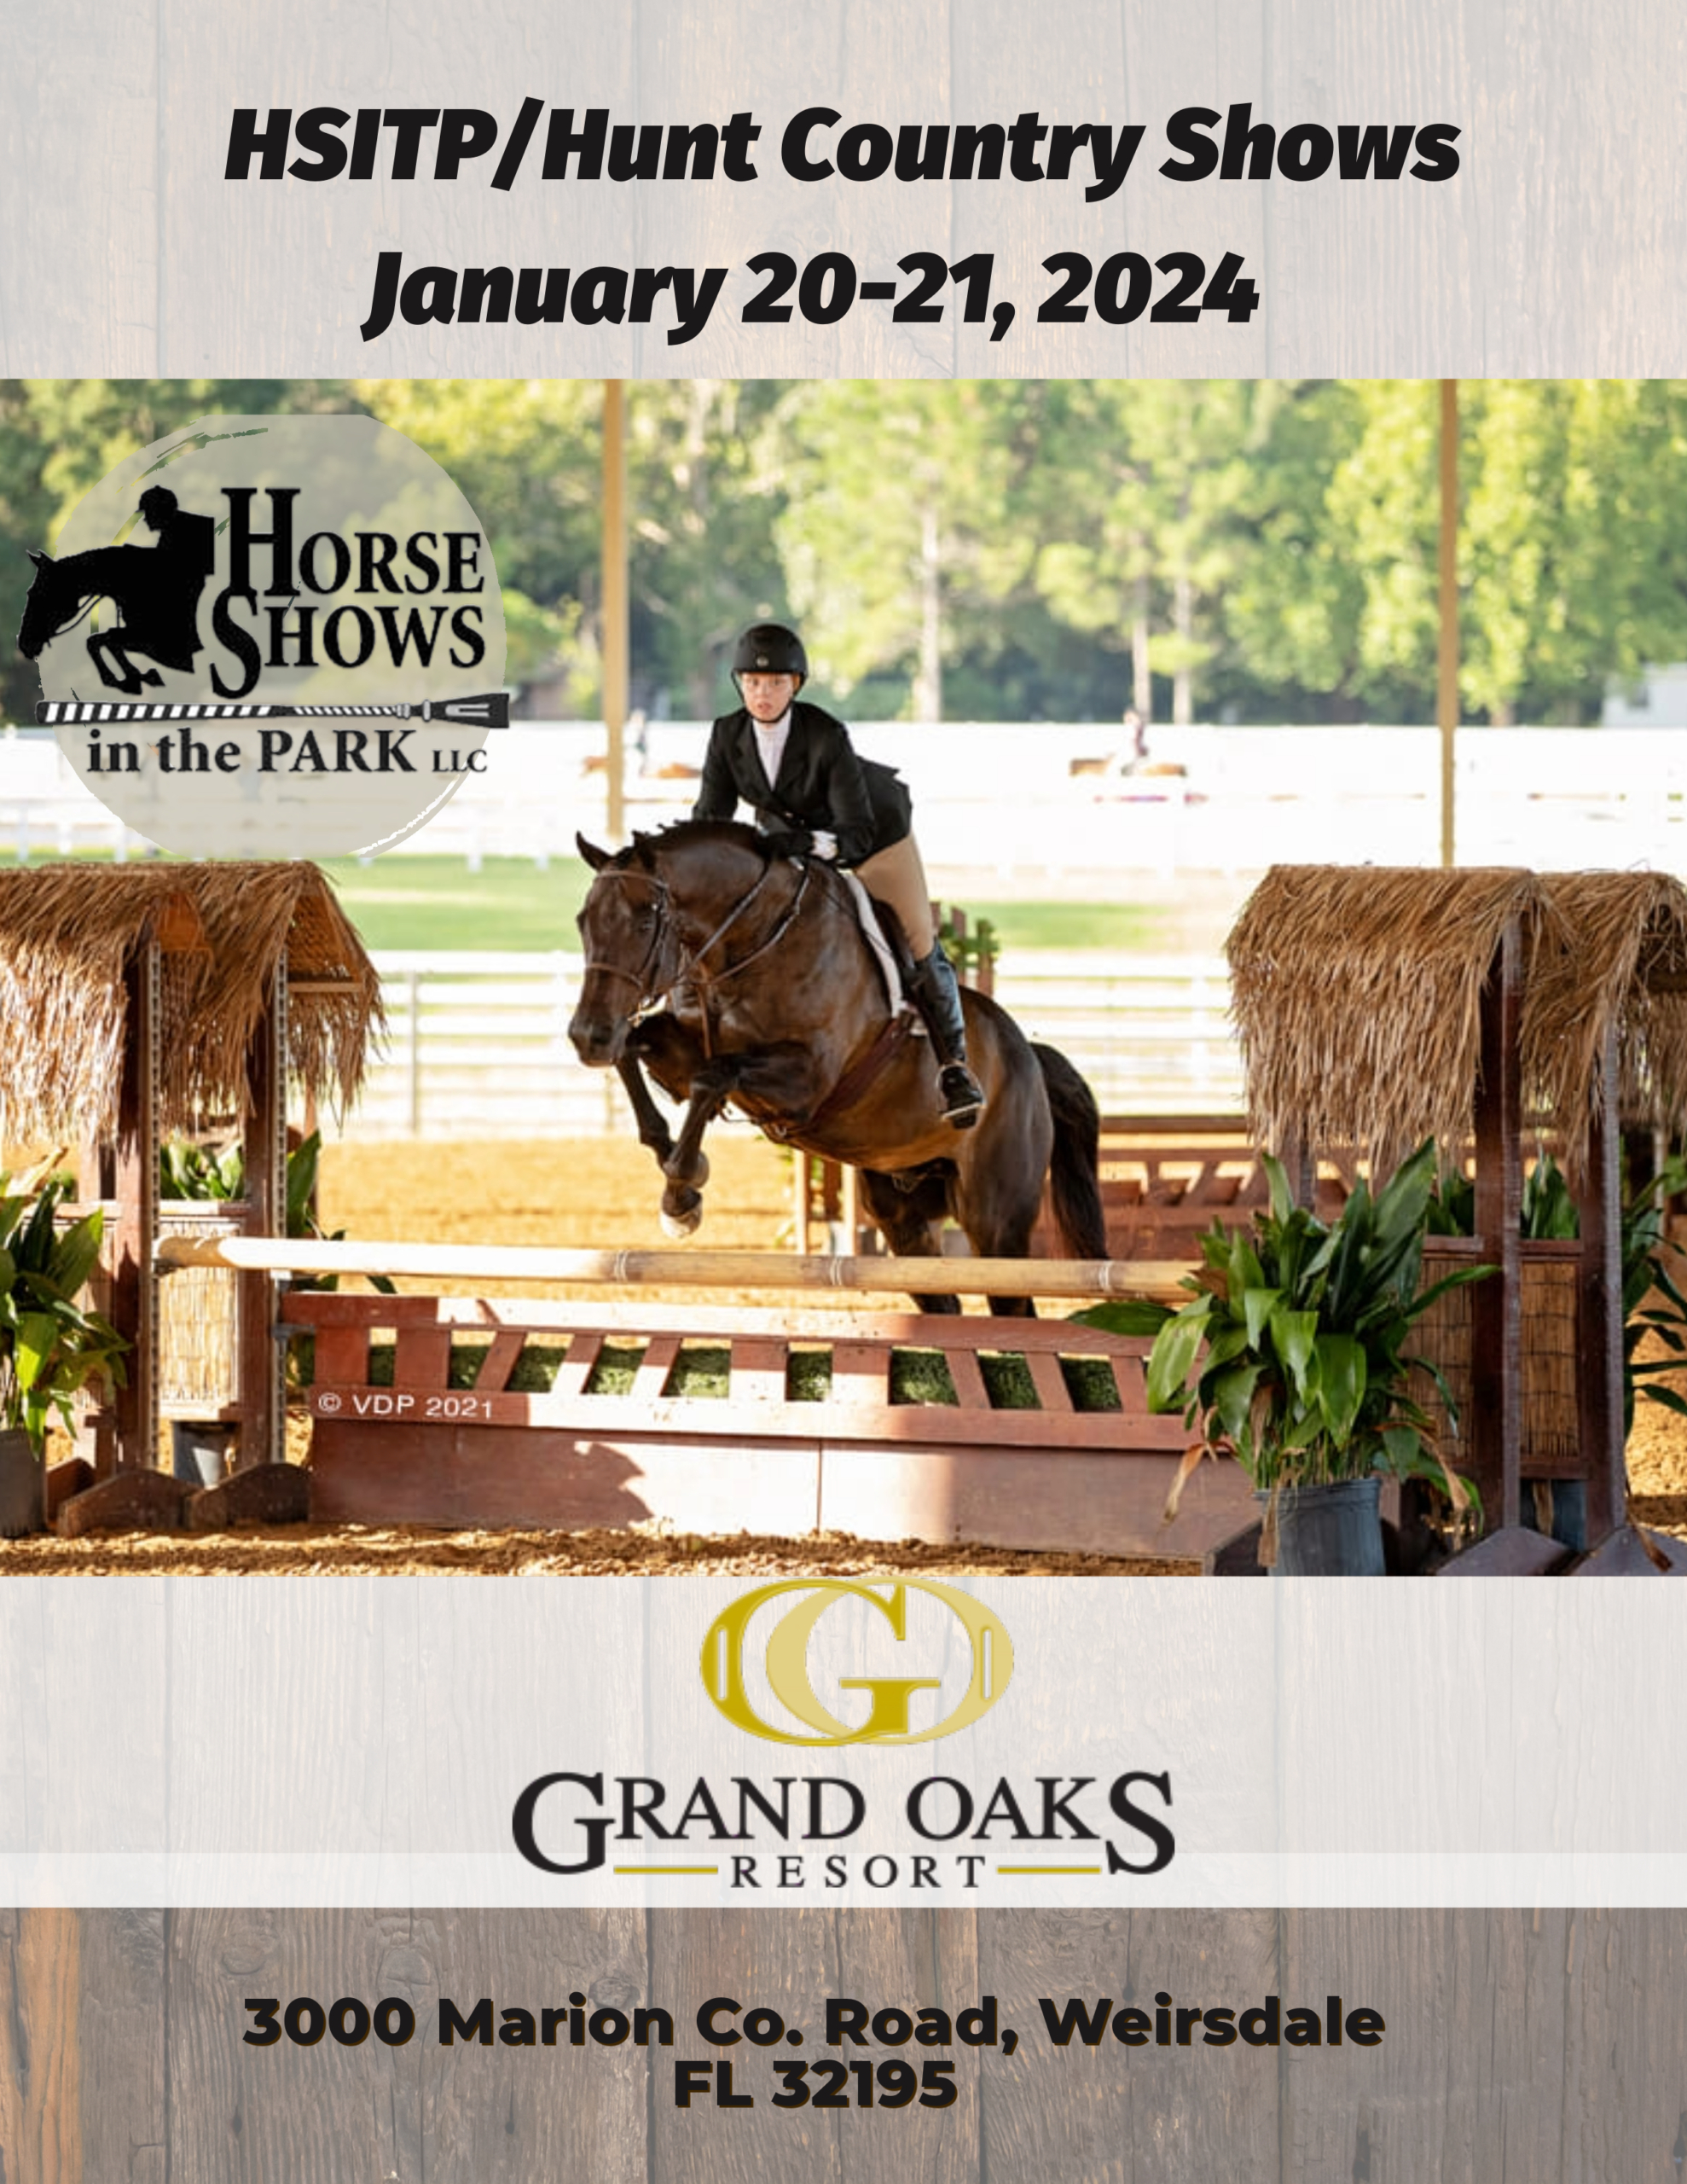 Hunter Jumper horse show at the Grand Oaks Resort